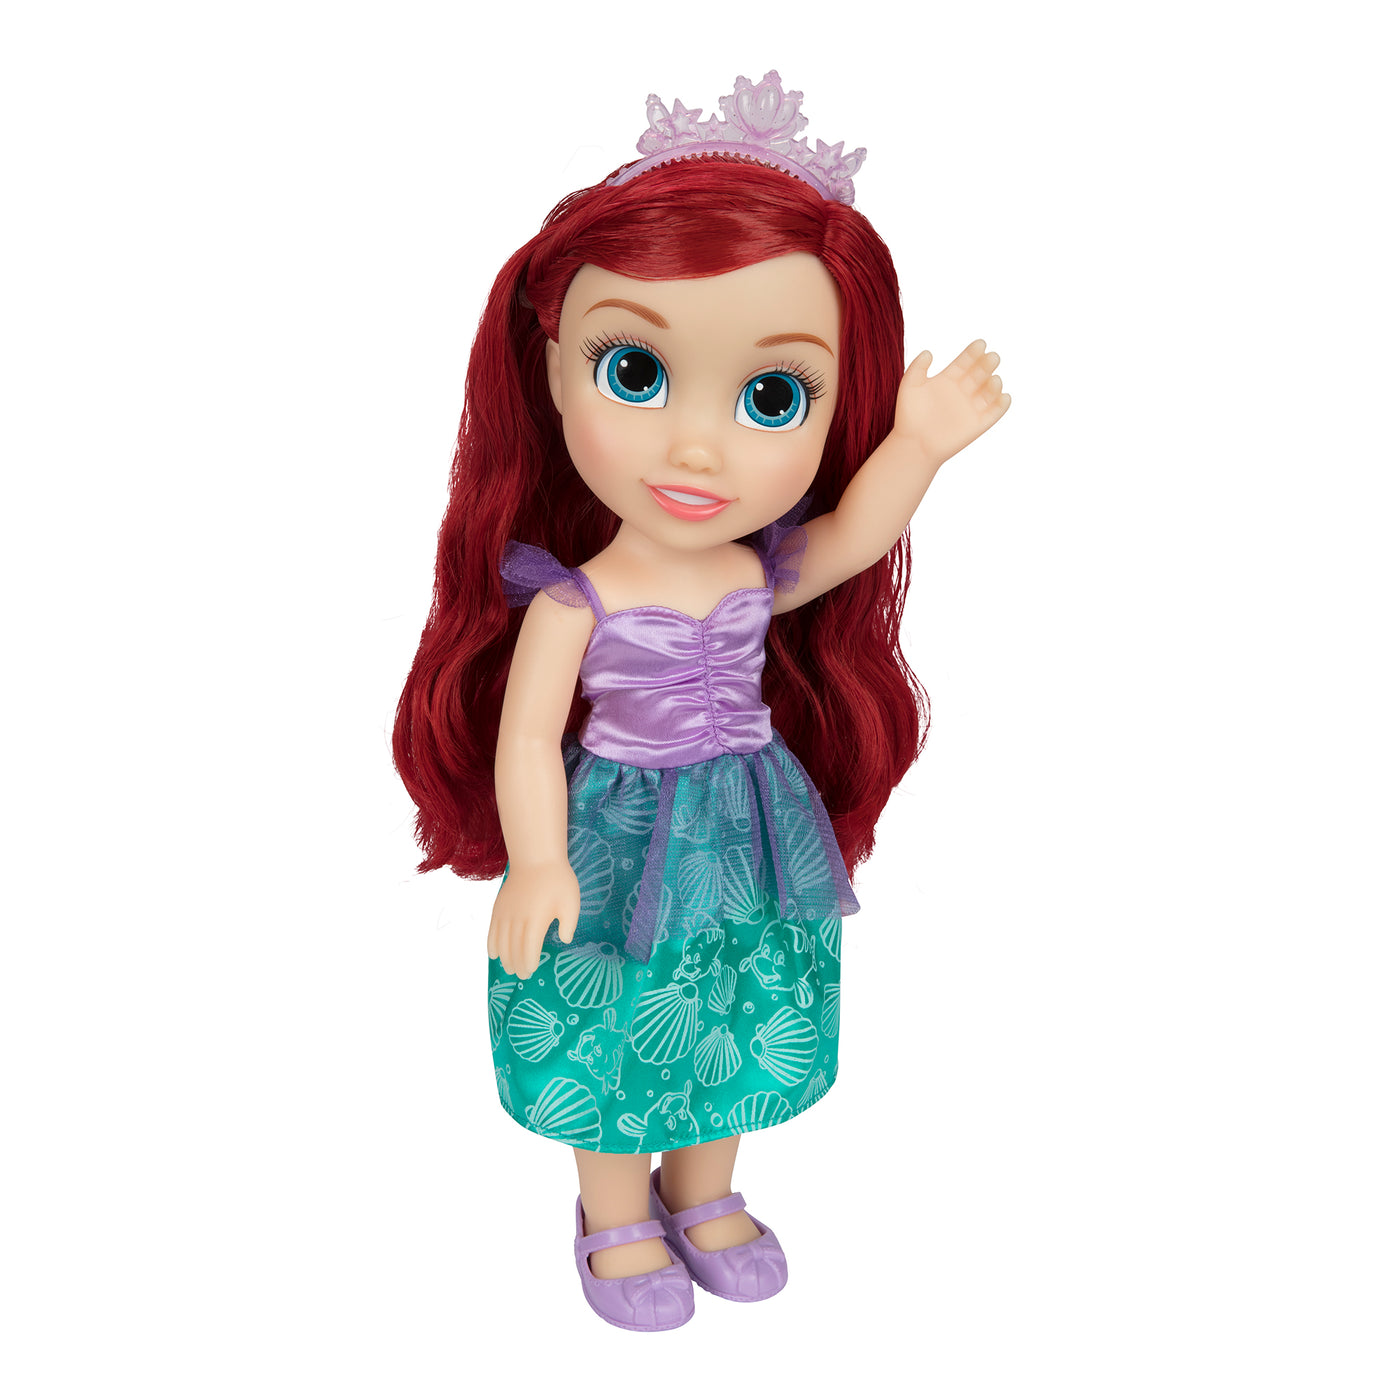 6 Disney Store Soft Plush Princess Dolls 20 16 11 Elsa, Rip in Dress,  See Pic